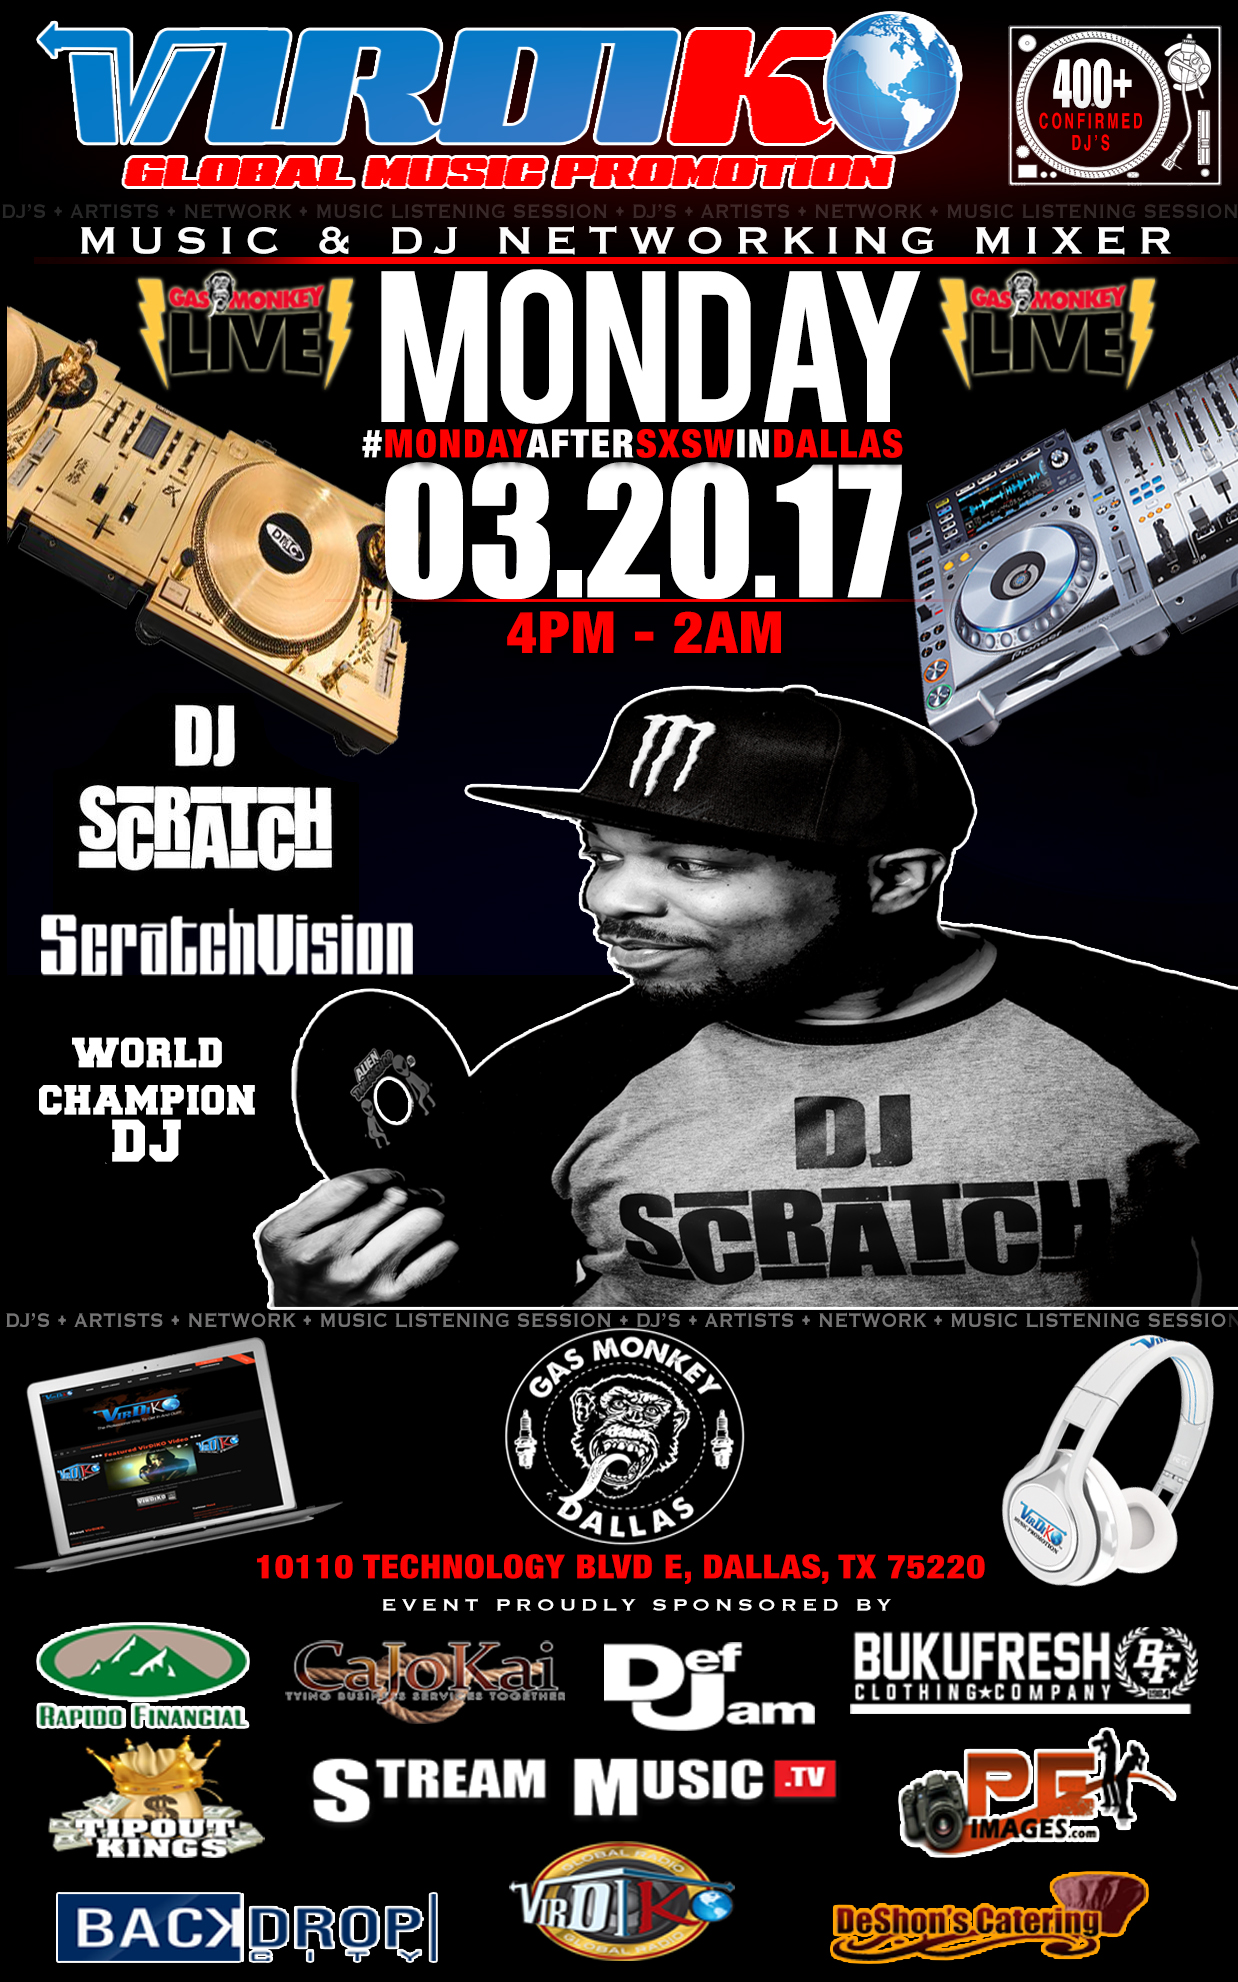 World Renown and Champion, DJ Scratch will perform live at the VirDiKO Music & DJ Mixer